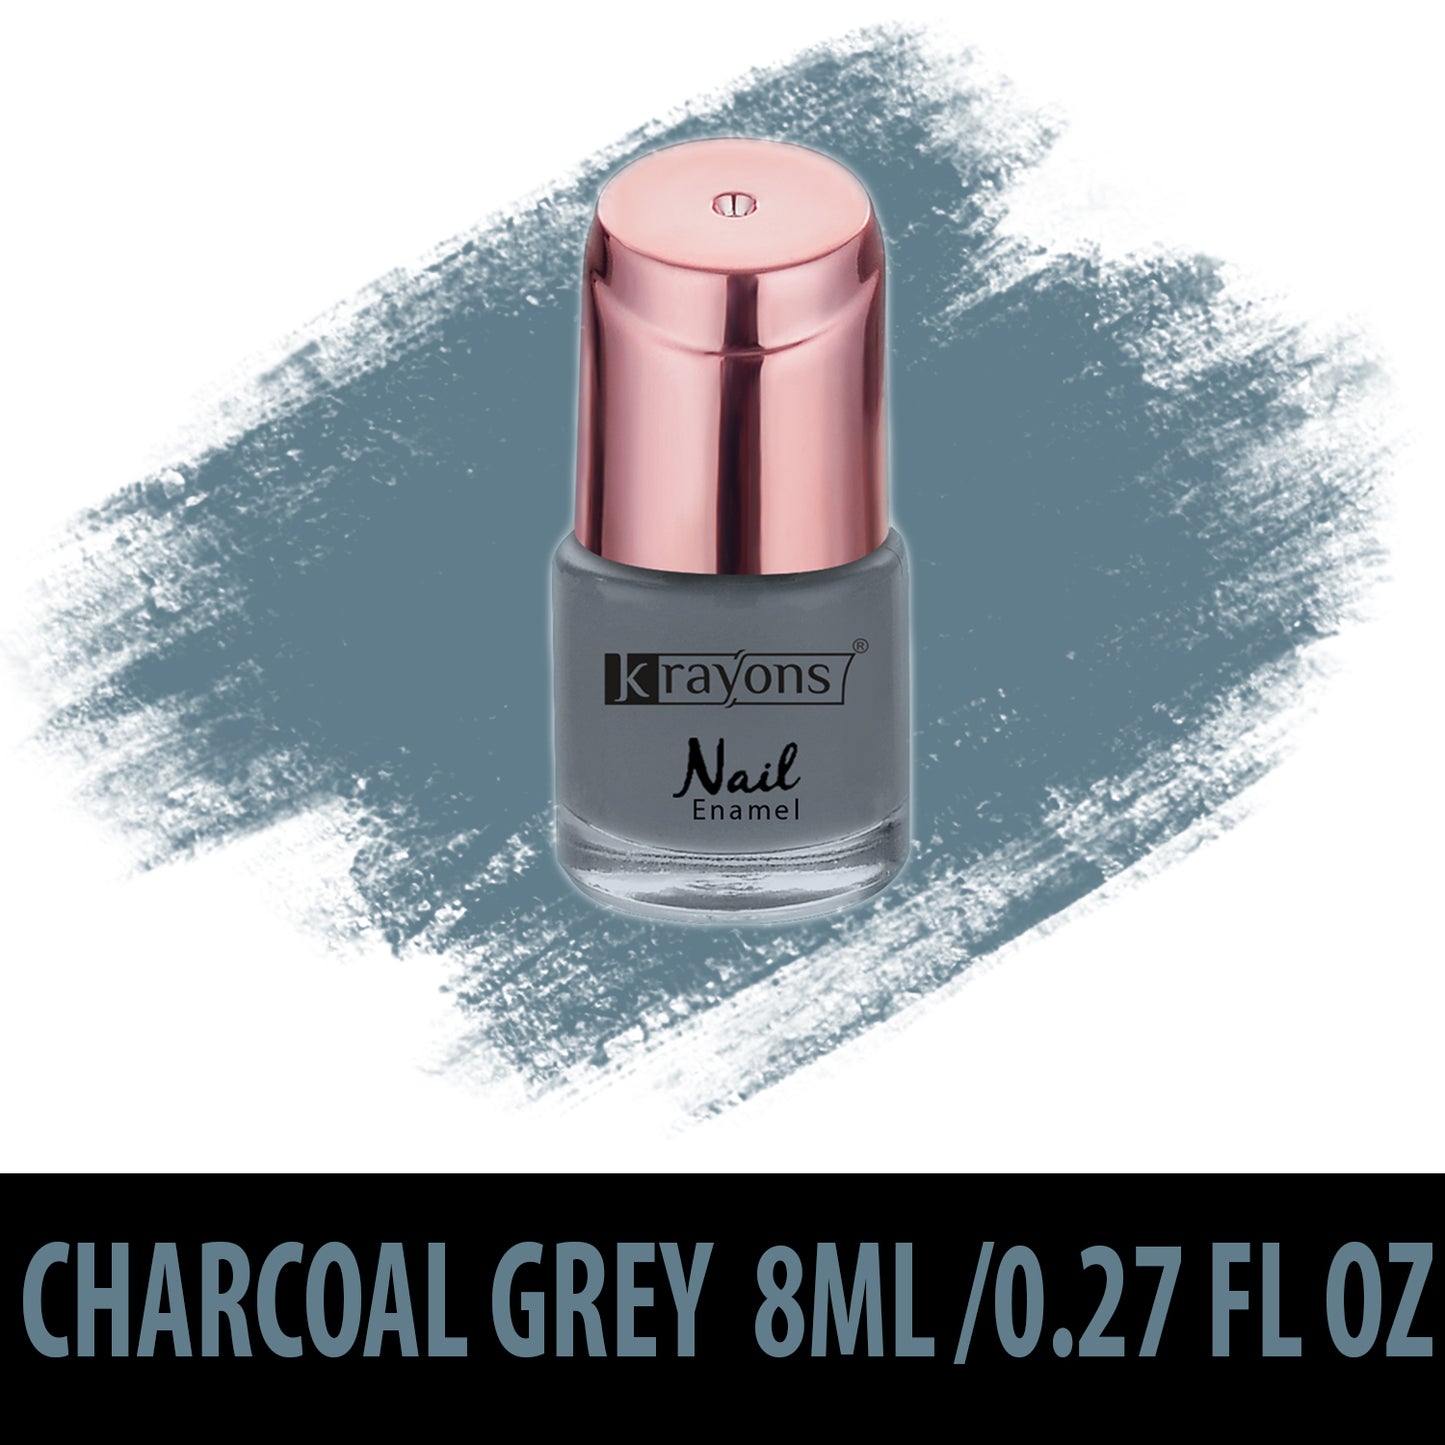  Charcoal Grey